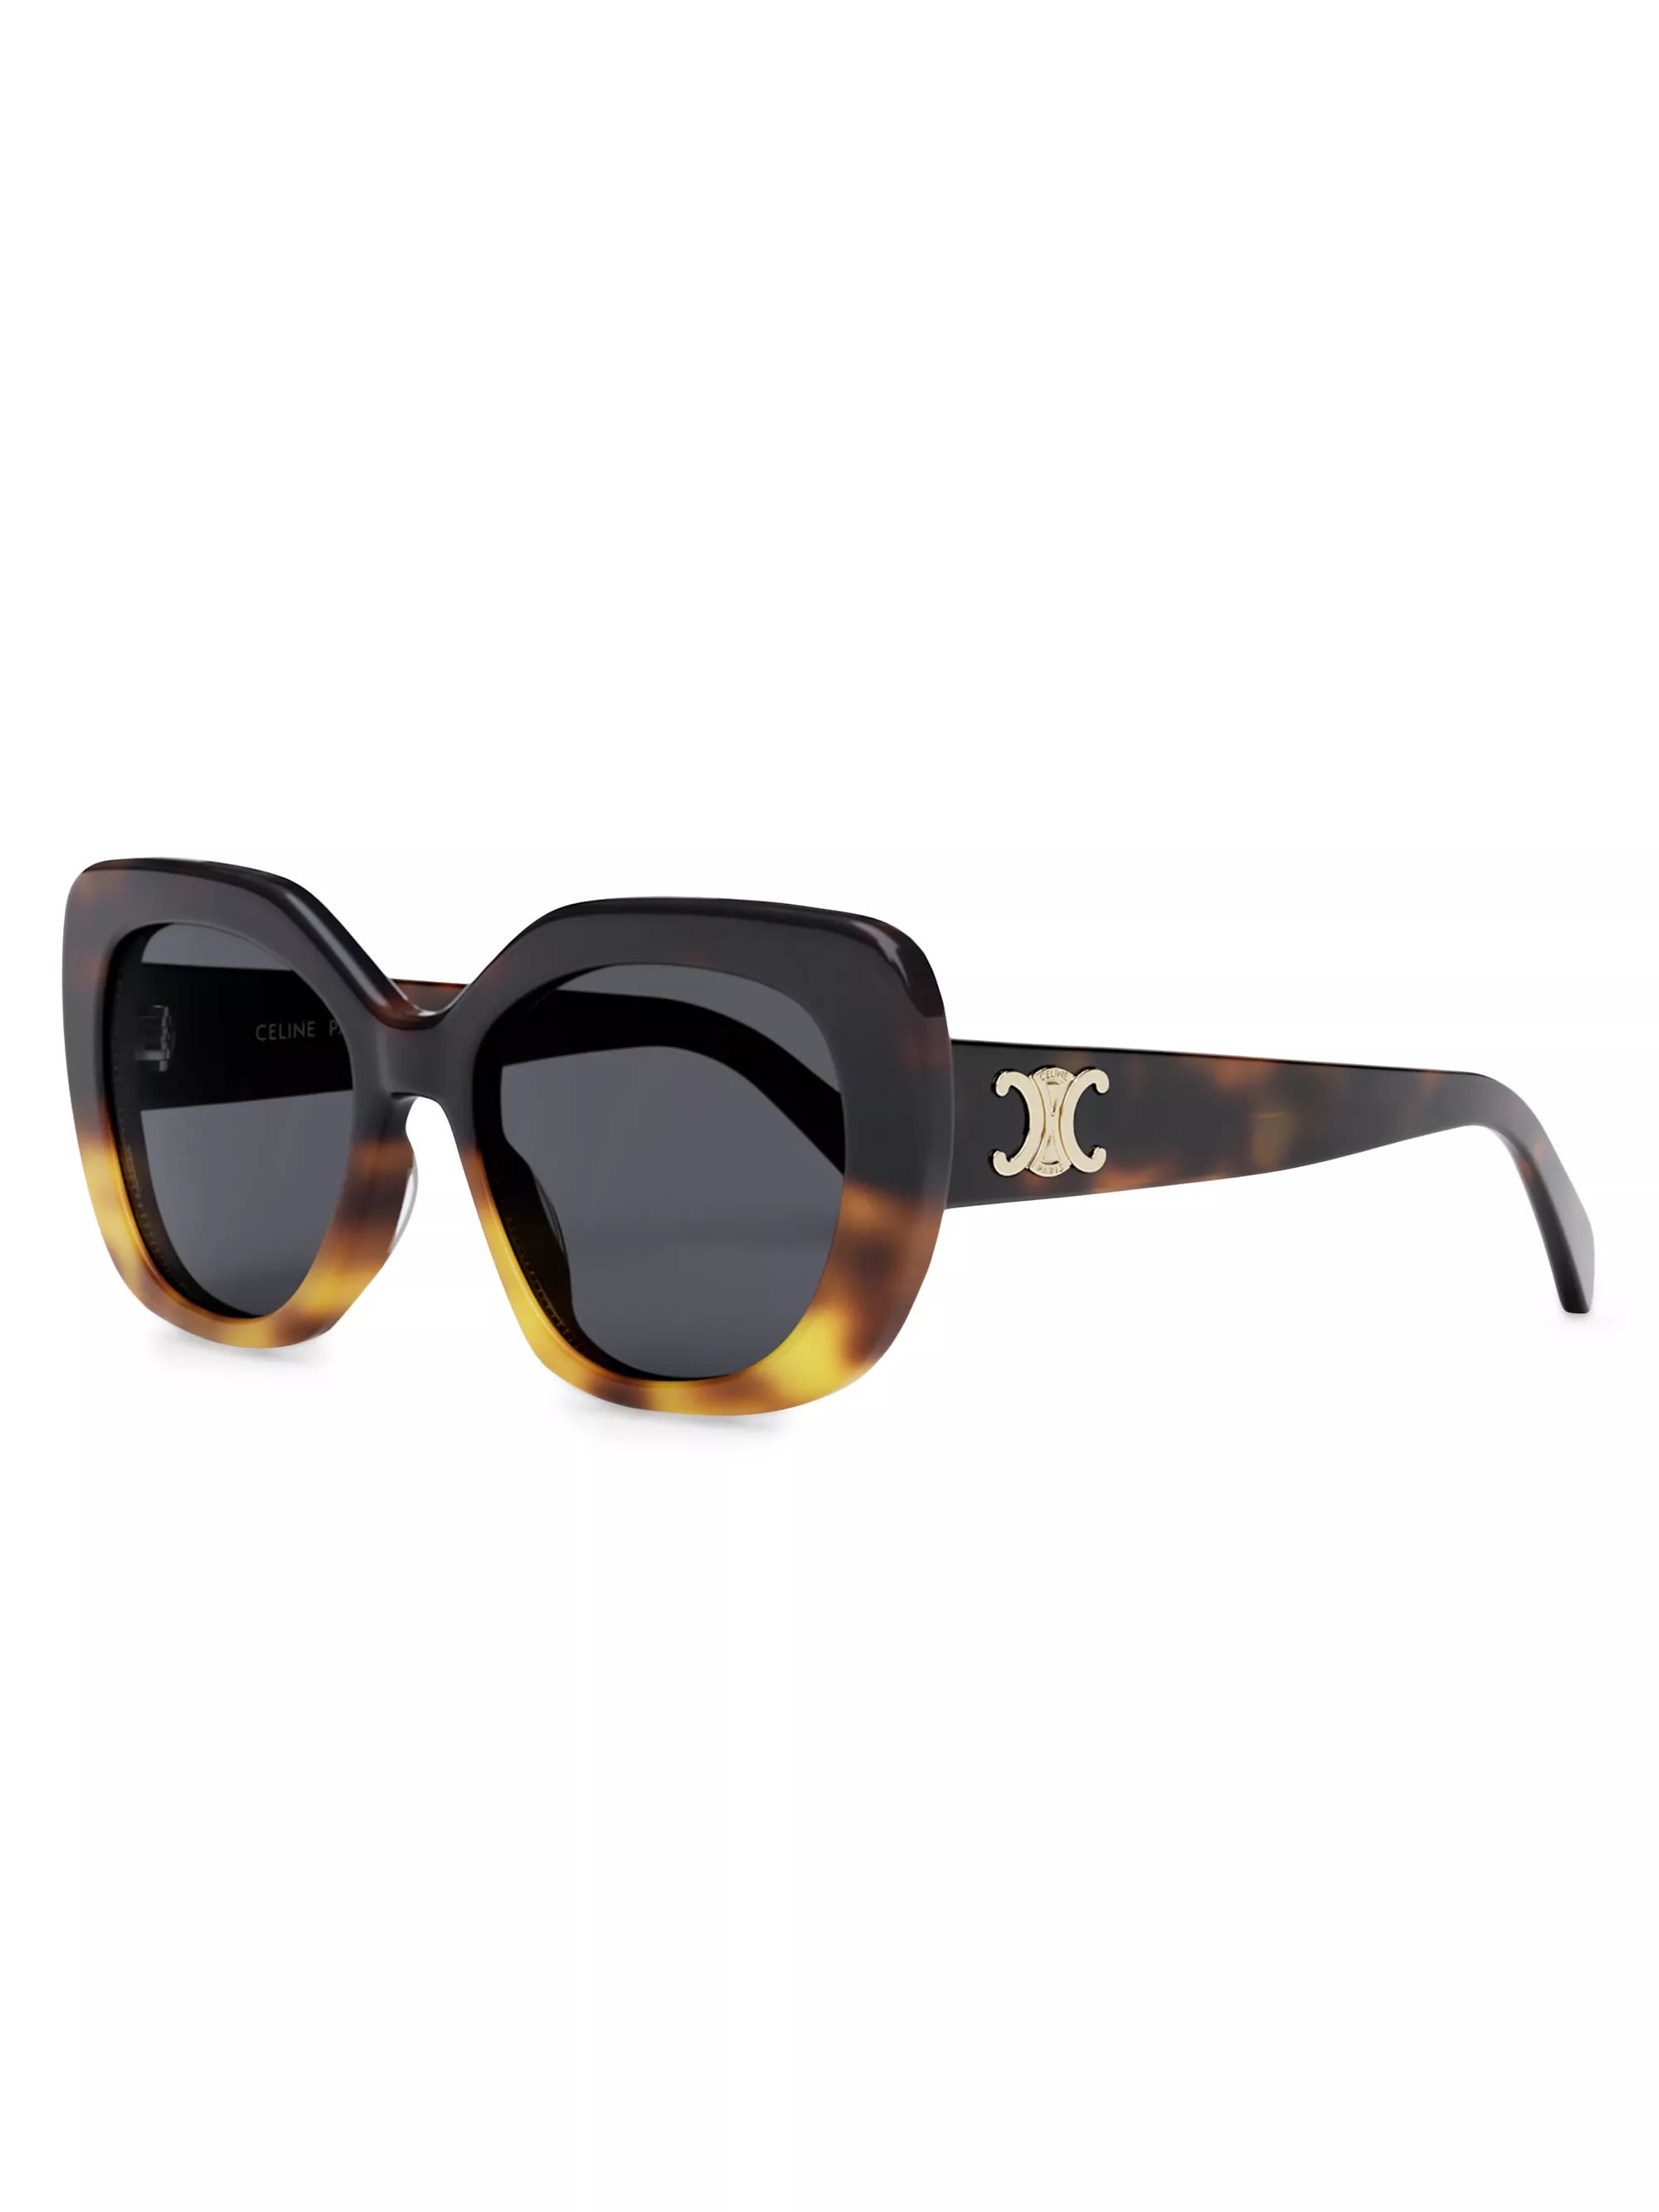 Shop CELINE 55MM Butterfly Round Sunglasses | Saks Fifth Avenue | Saks Fifth Avenue